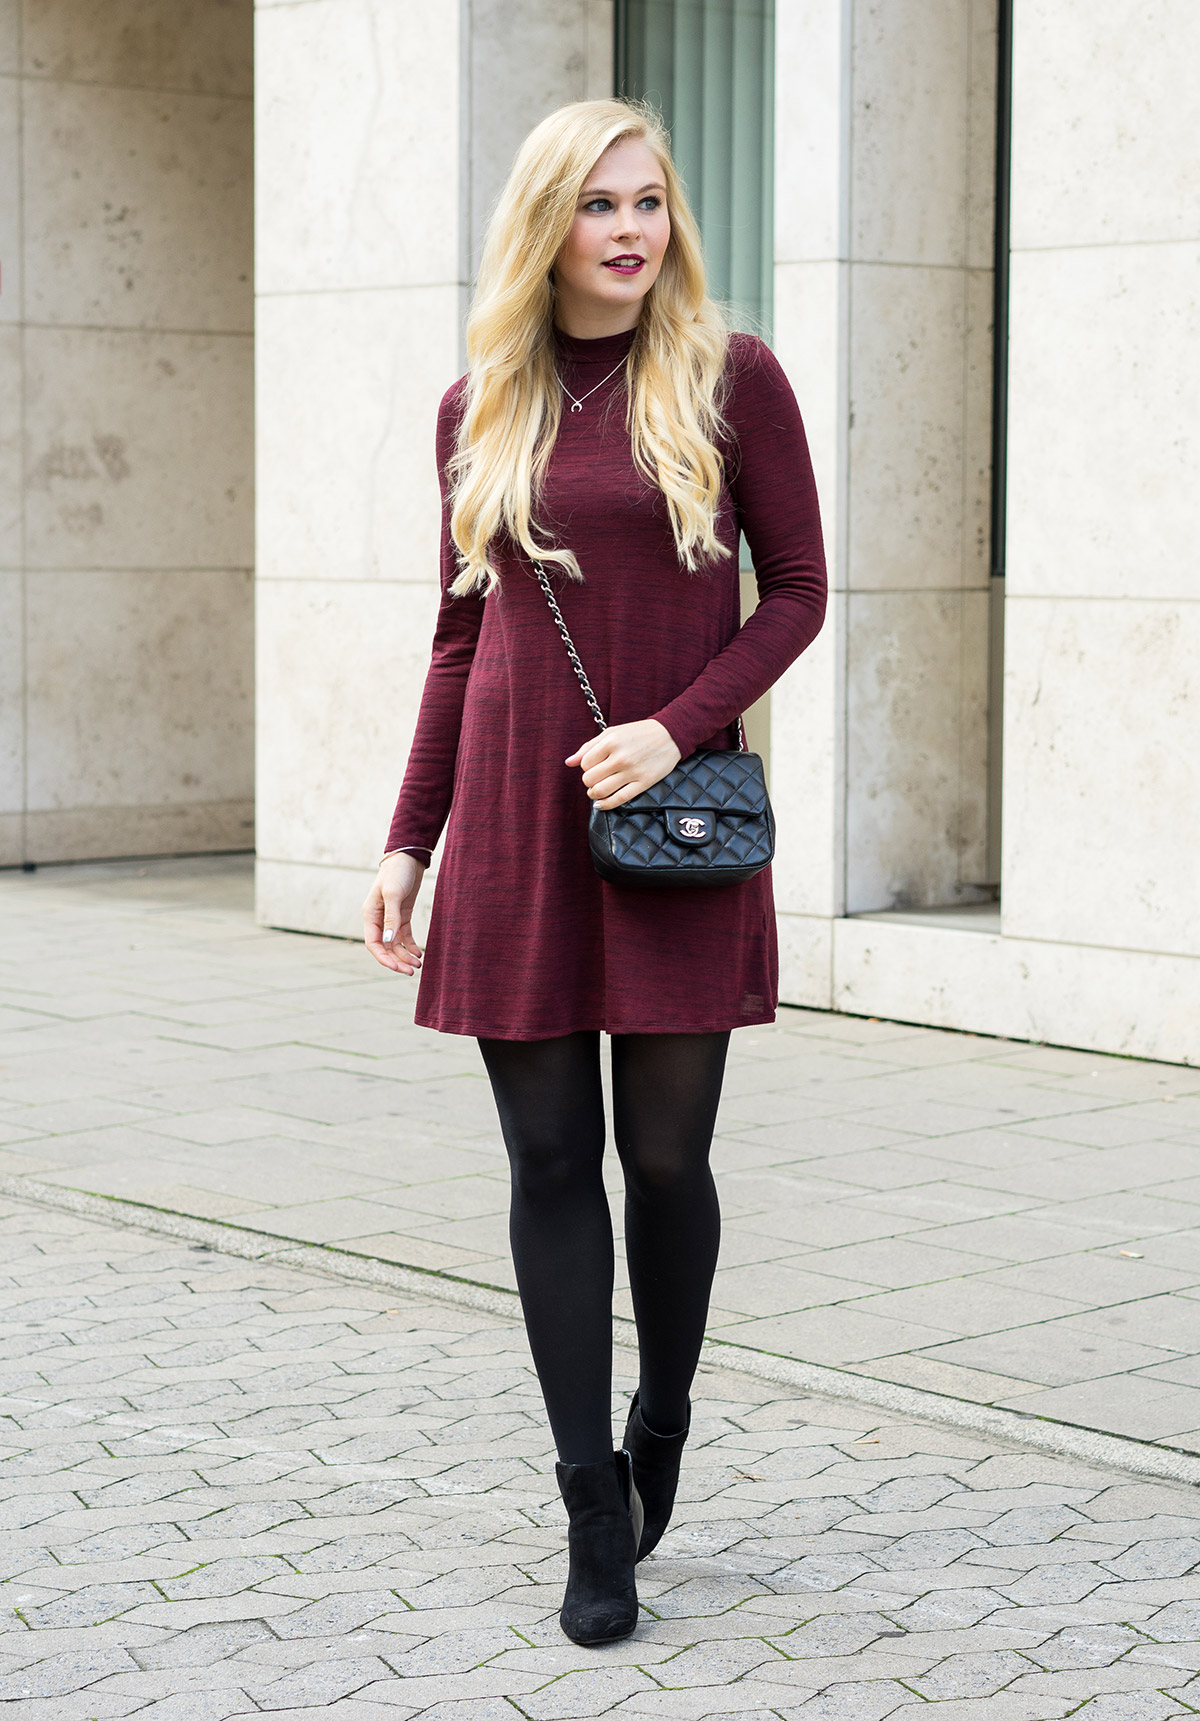 Winterkleid Outfit